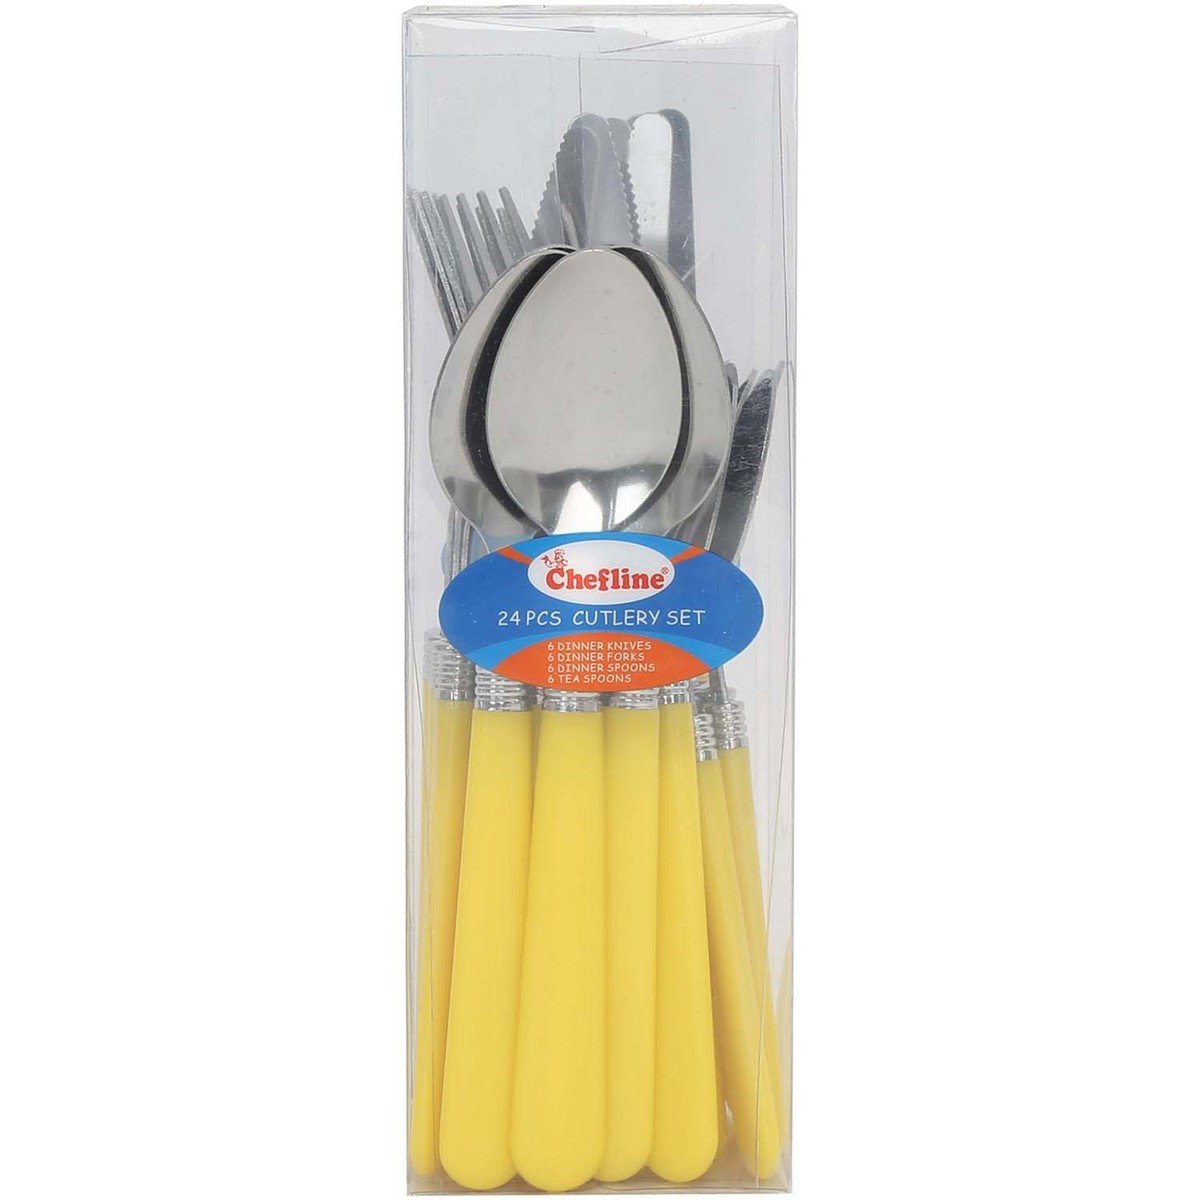 Chefline Cutlery Set 24pcs Assorted Color